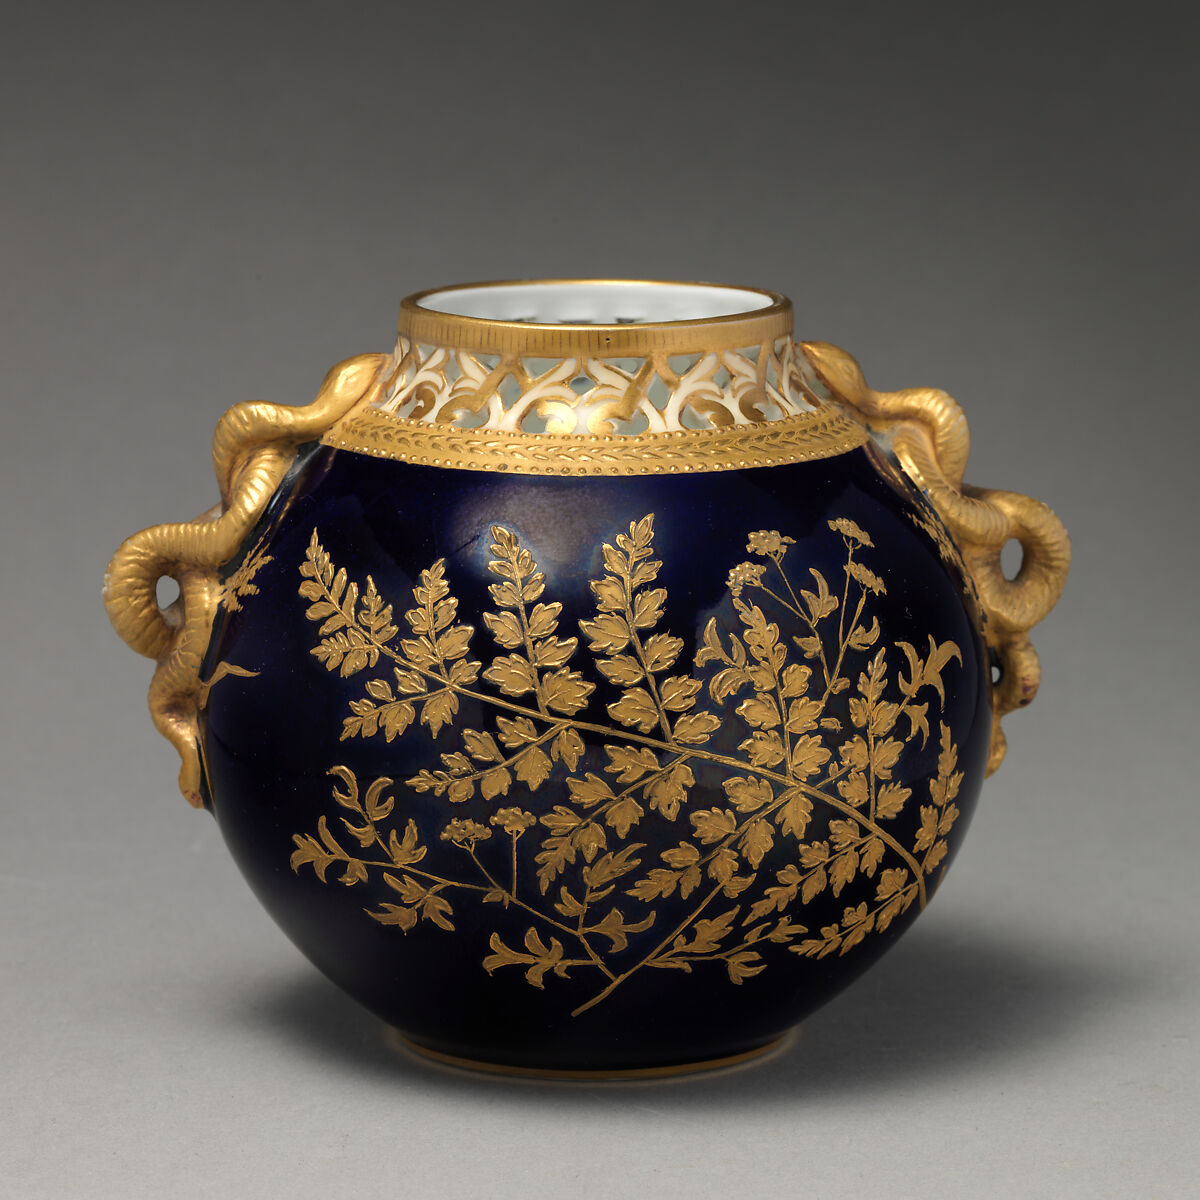 Orb vase with gold fern motif, Grainger (British, active late 18th century), Porcelain, British, Worcester 